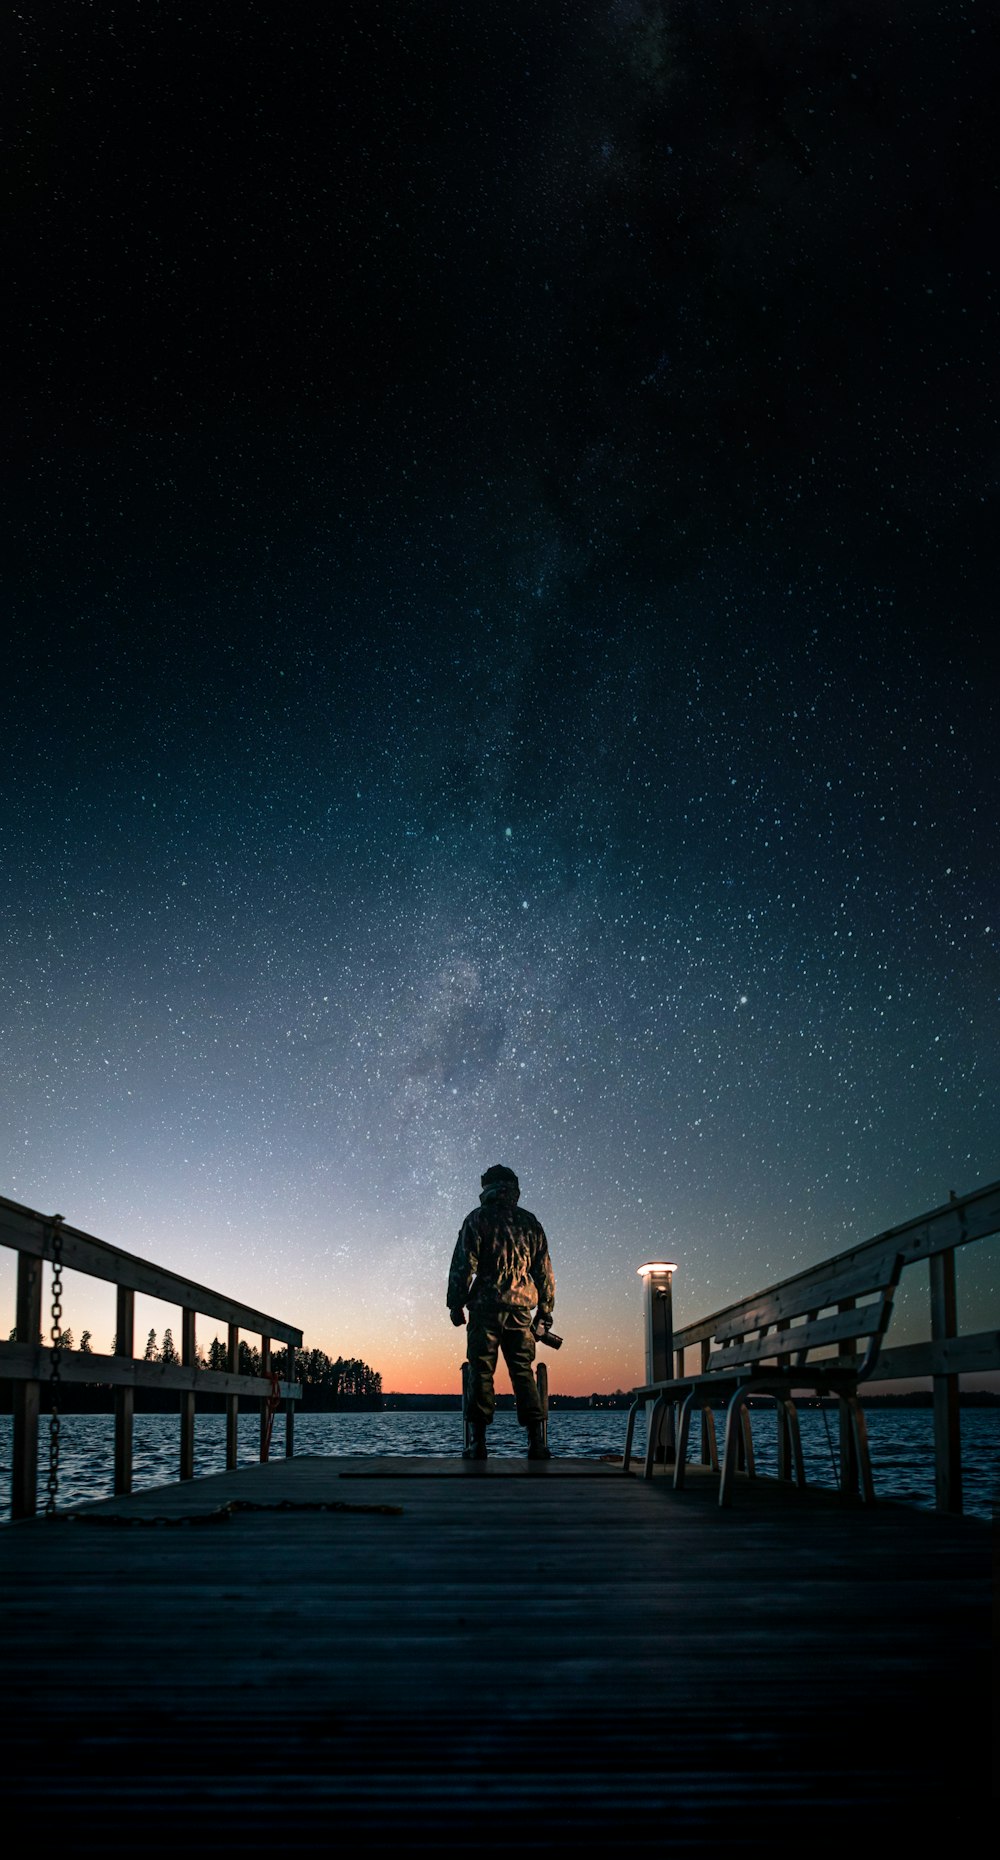 man in black jacket standing on brown wooden bridge under starry night